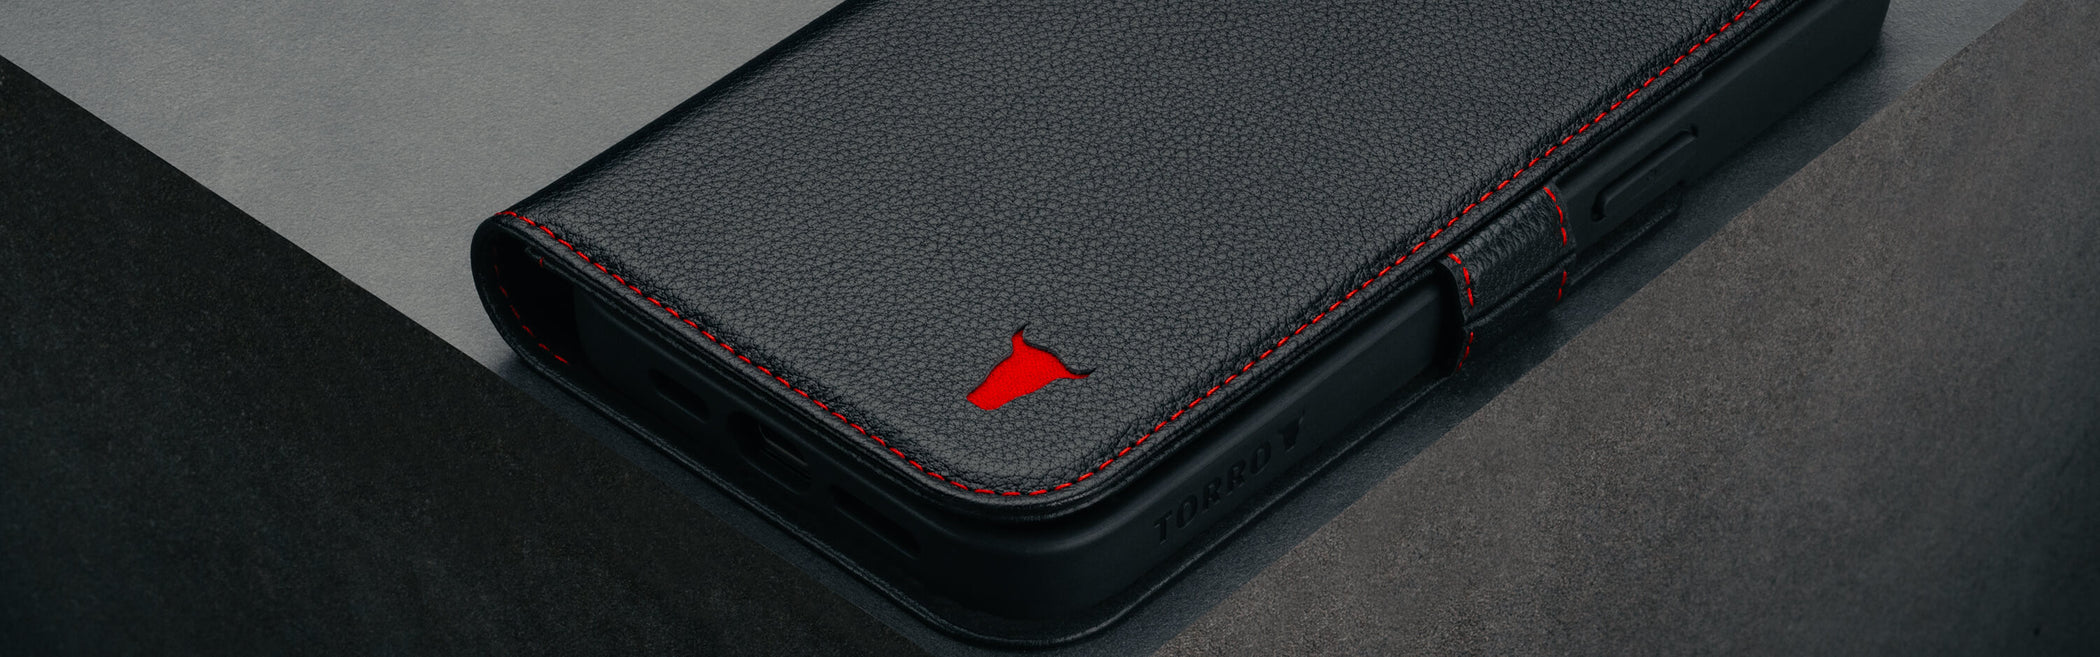 Google Pixel 6 Leather Cases